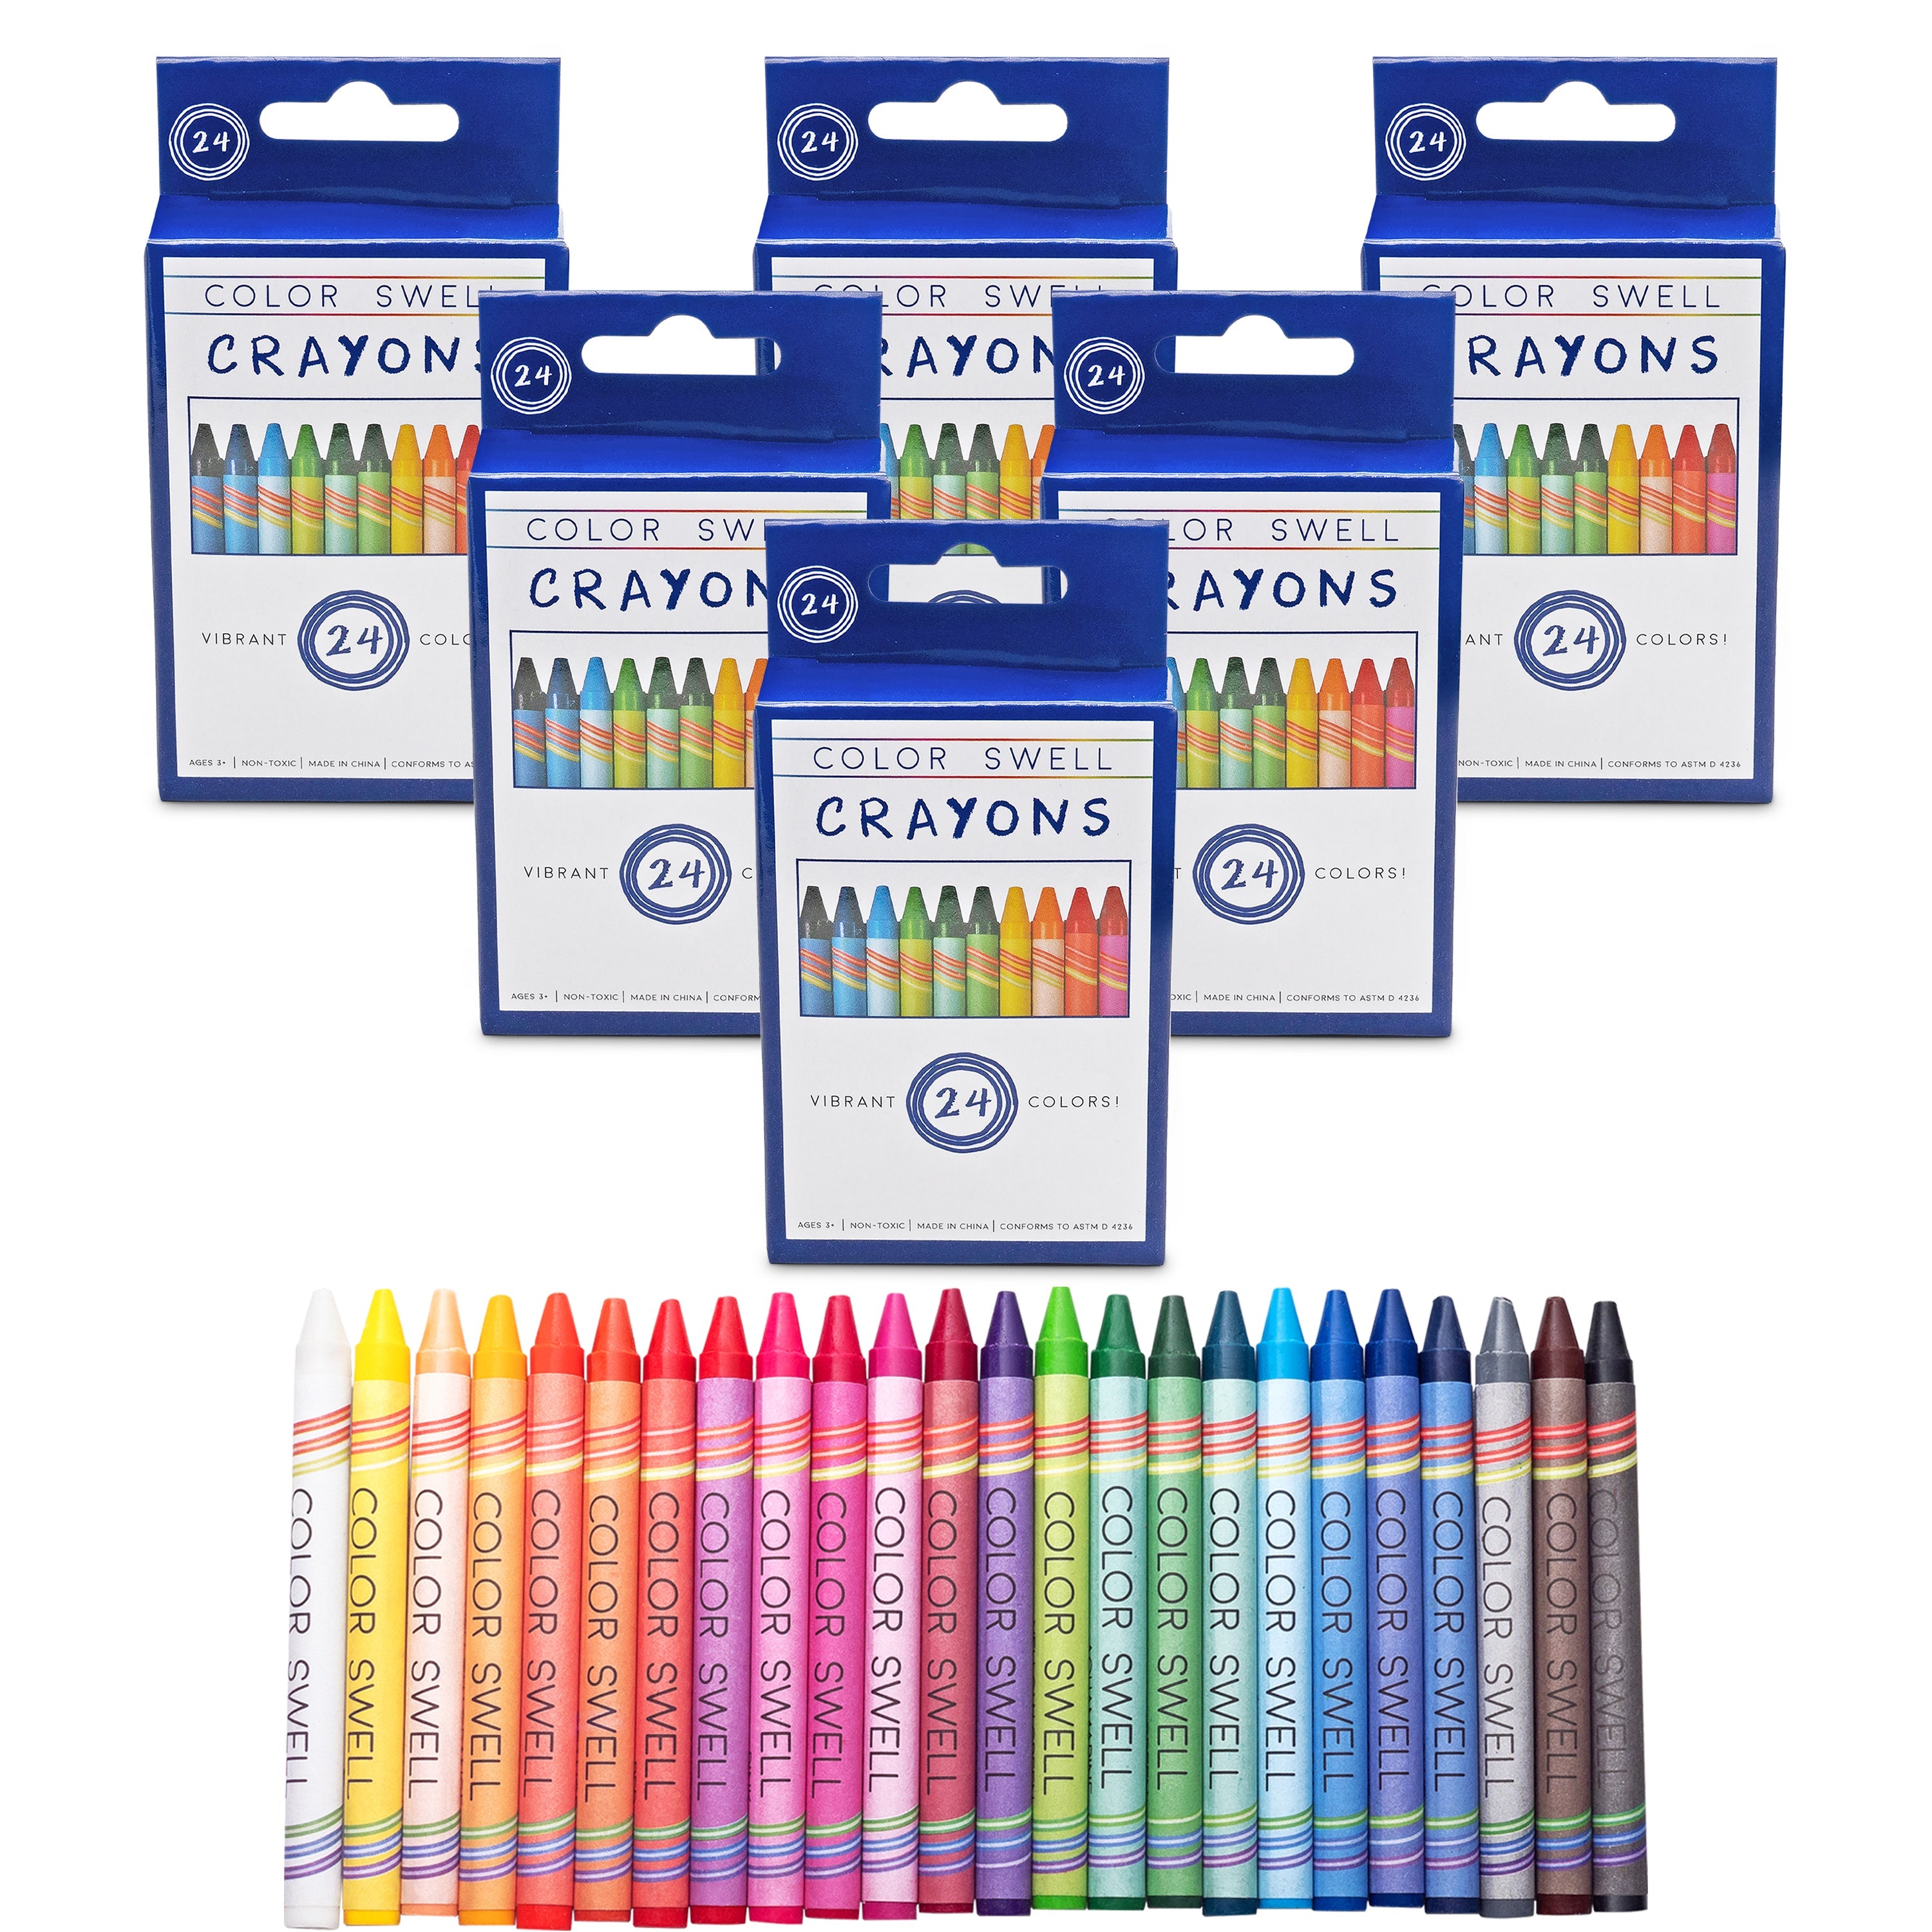 Color Swell Neon Crayons Bulk Packs - 18 Boxes of Fun Neon Bulk